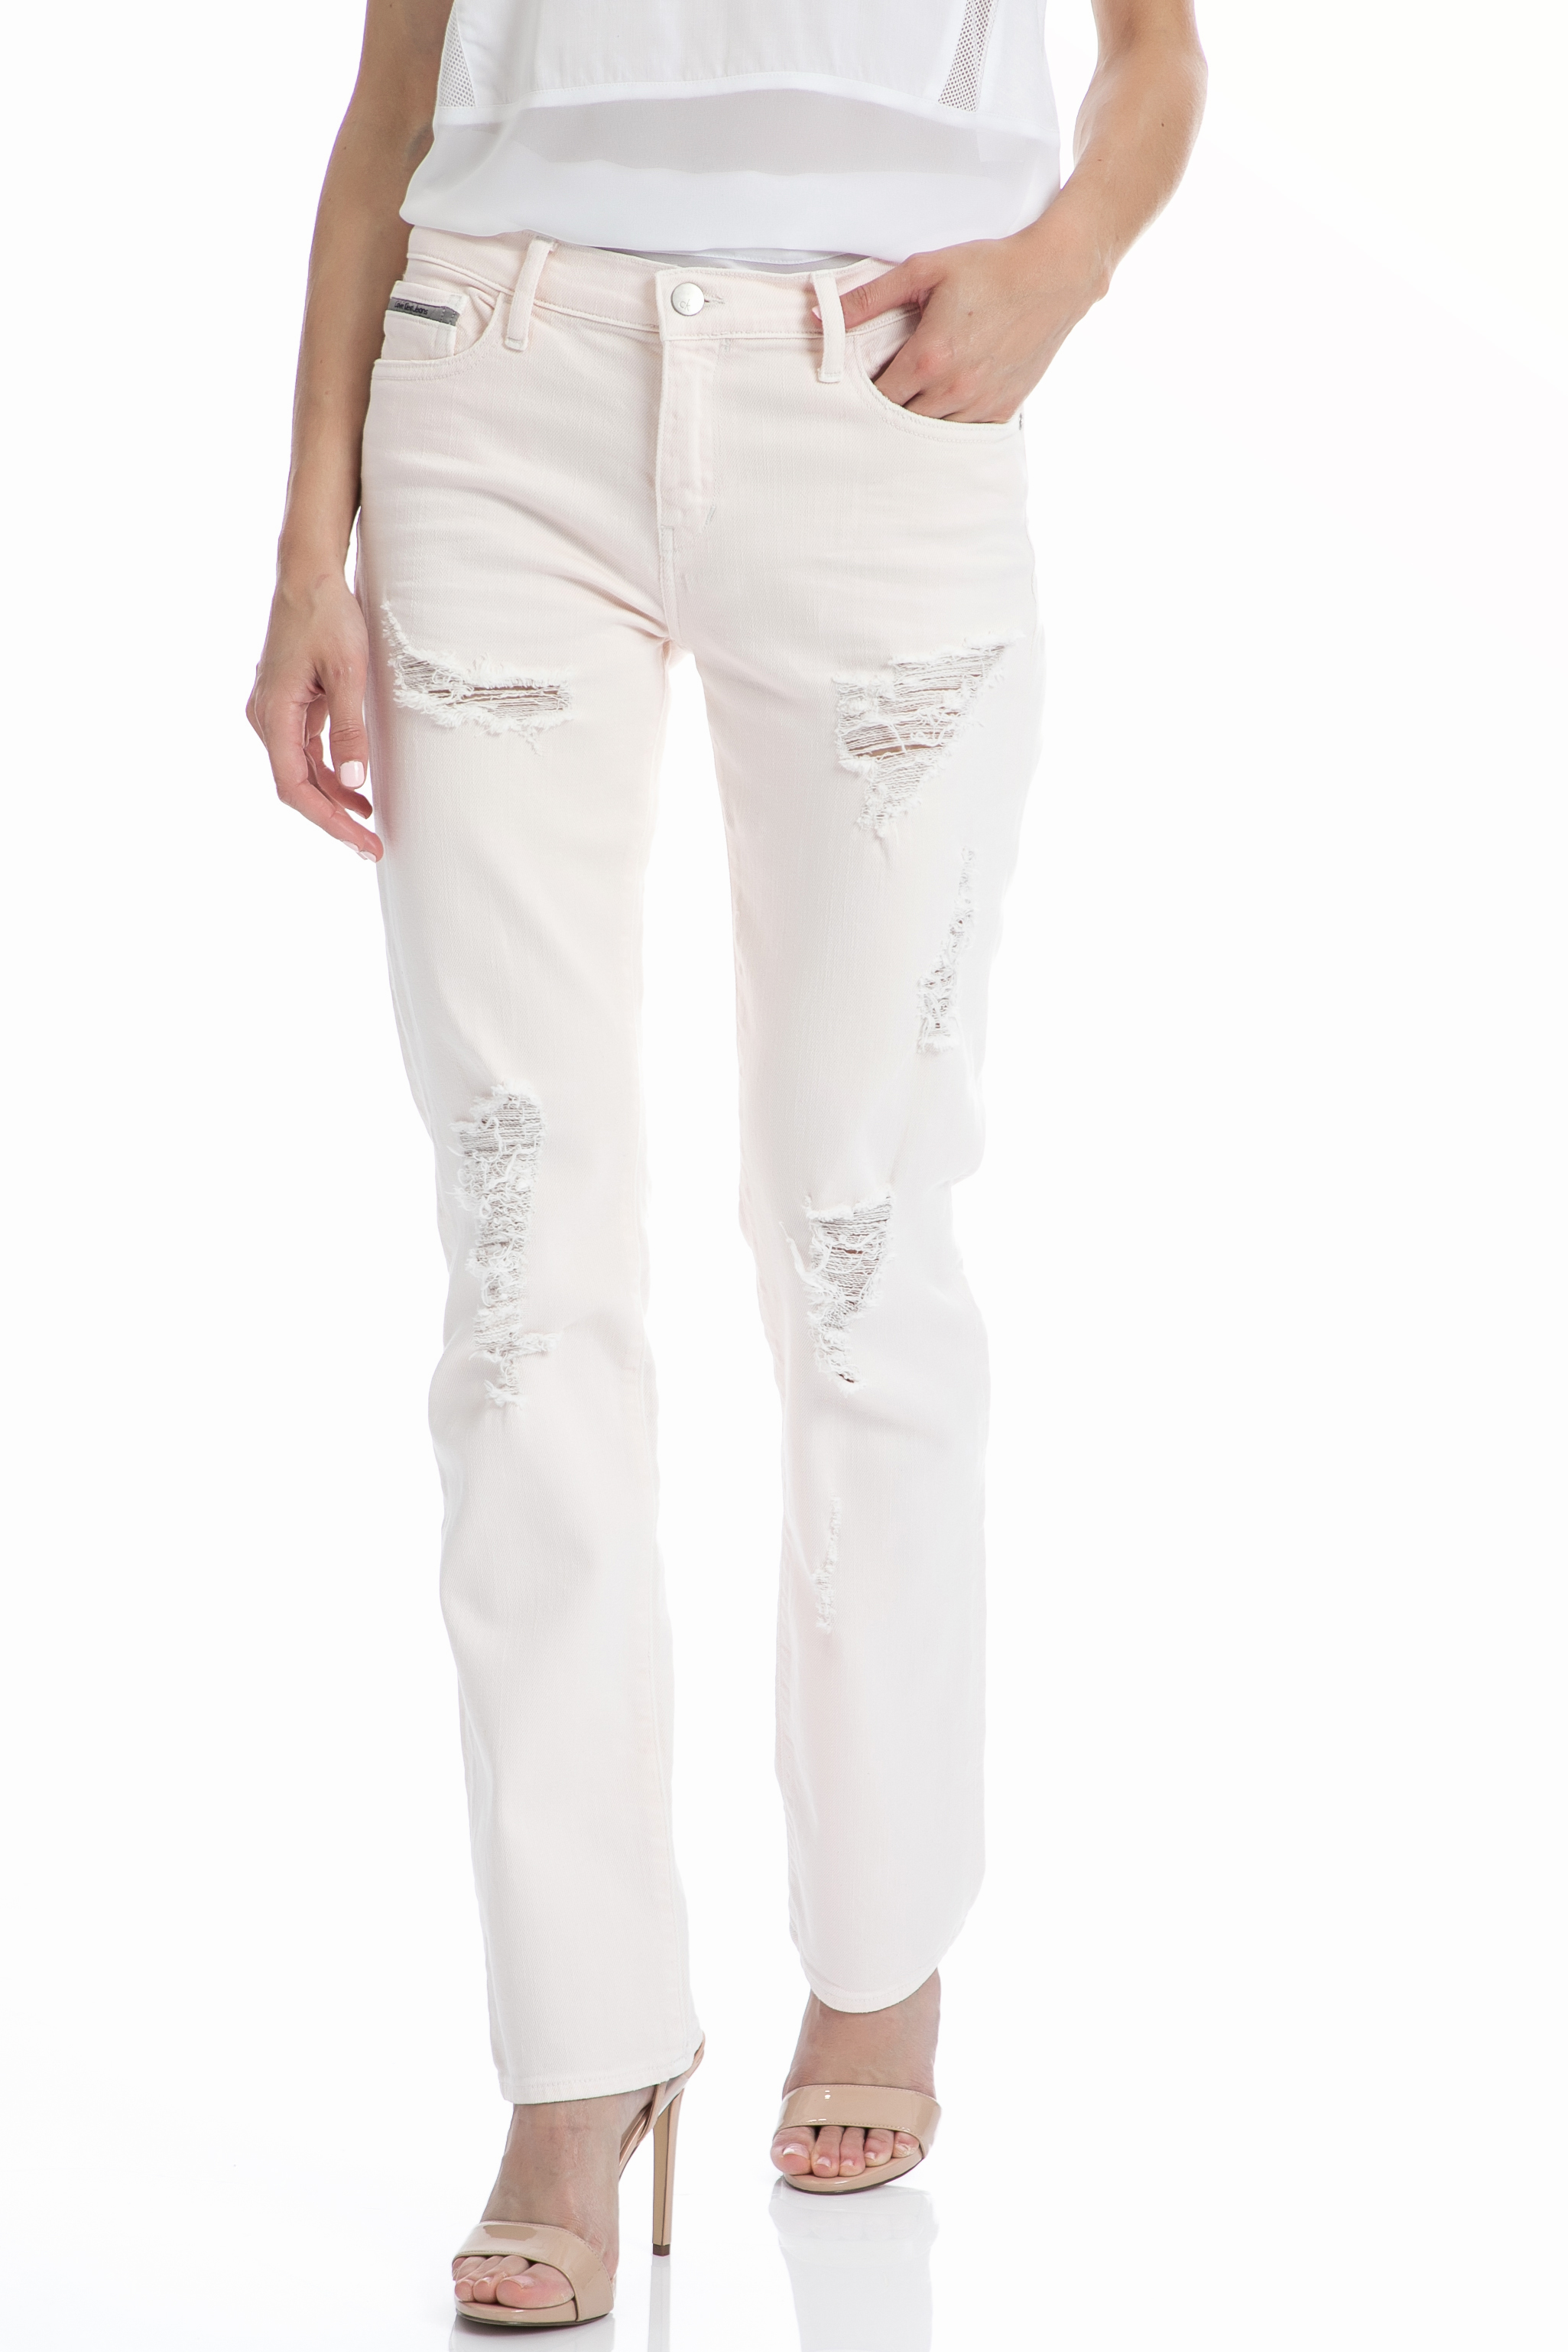 CALVIN KLEIN JEANS - Γυναικείο τζιν παντελόνι CALVIN KLEIN JEANS λευκό Γυναικεία/Ρούχα/Τζίν/Straight